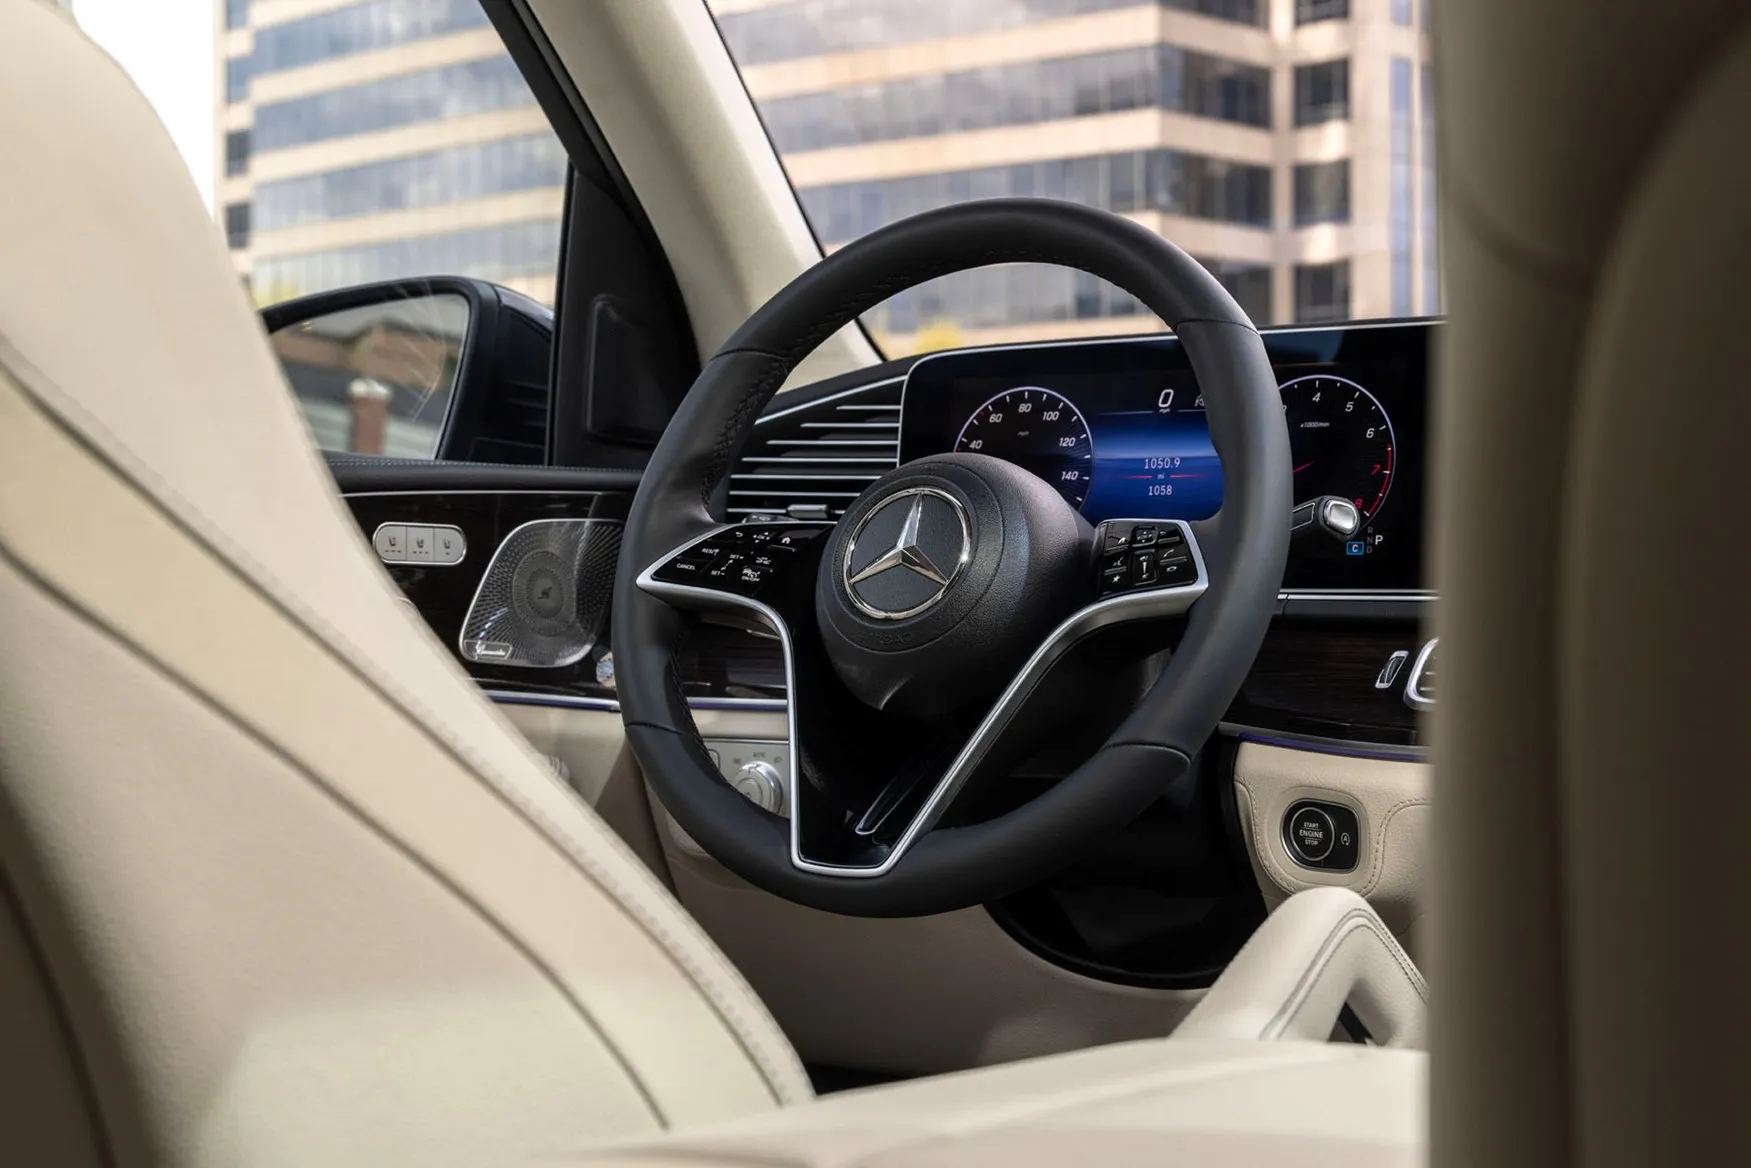 Mercedes-Benz GLE Class Price in Kenya